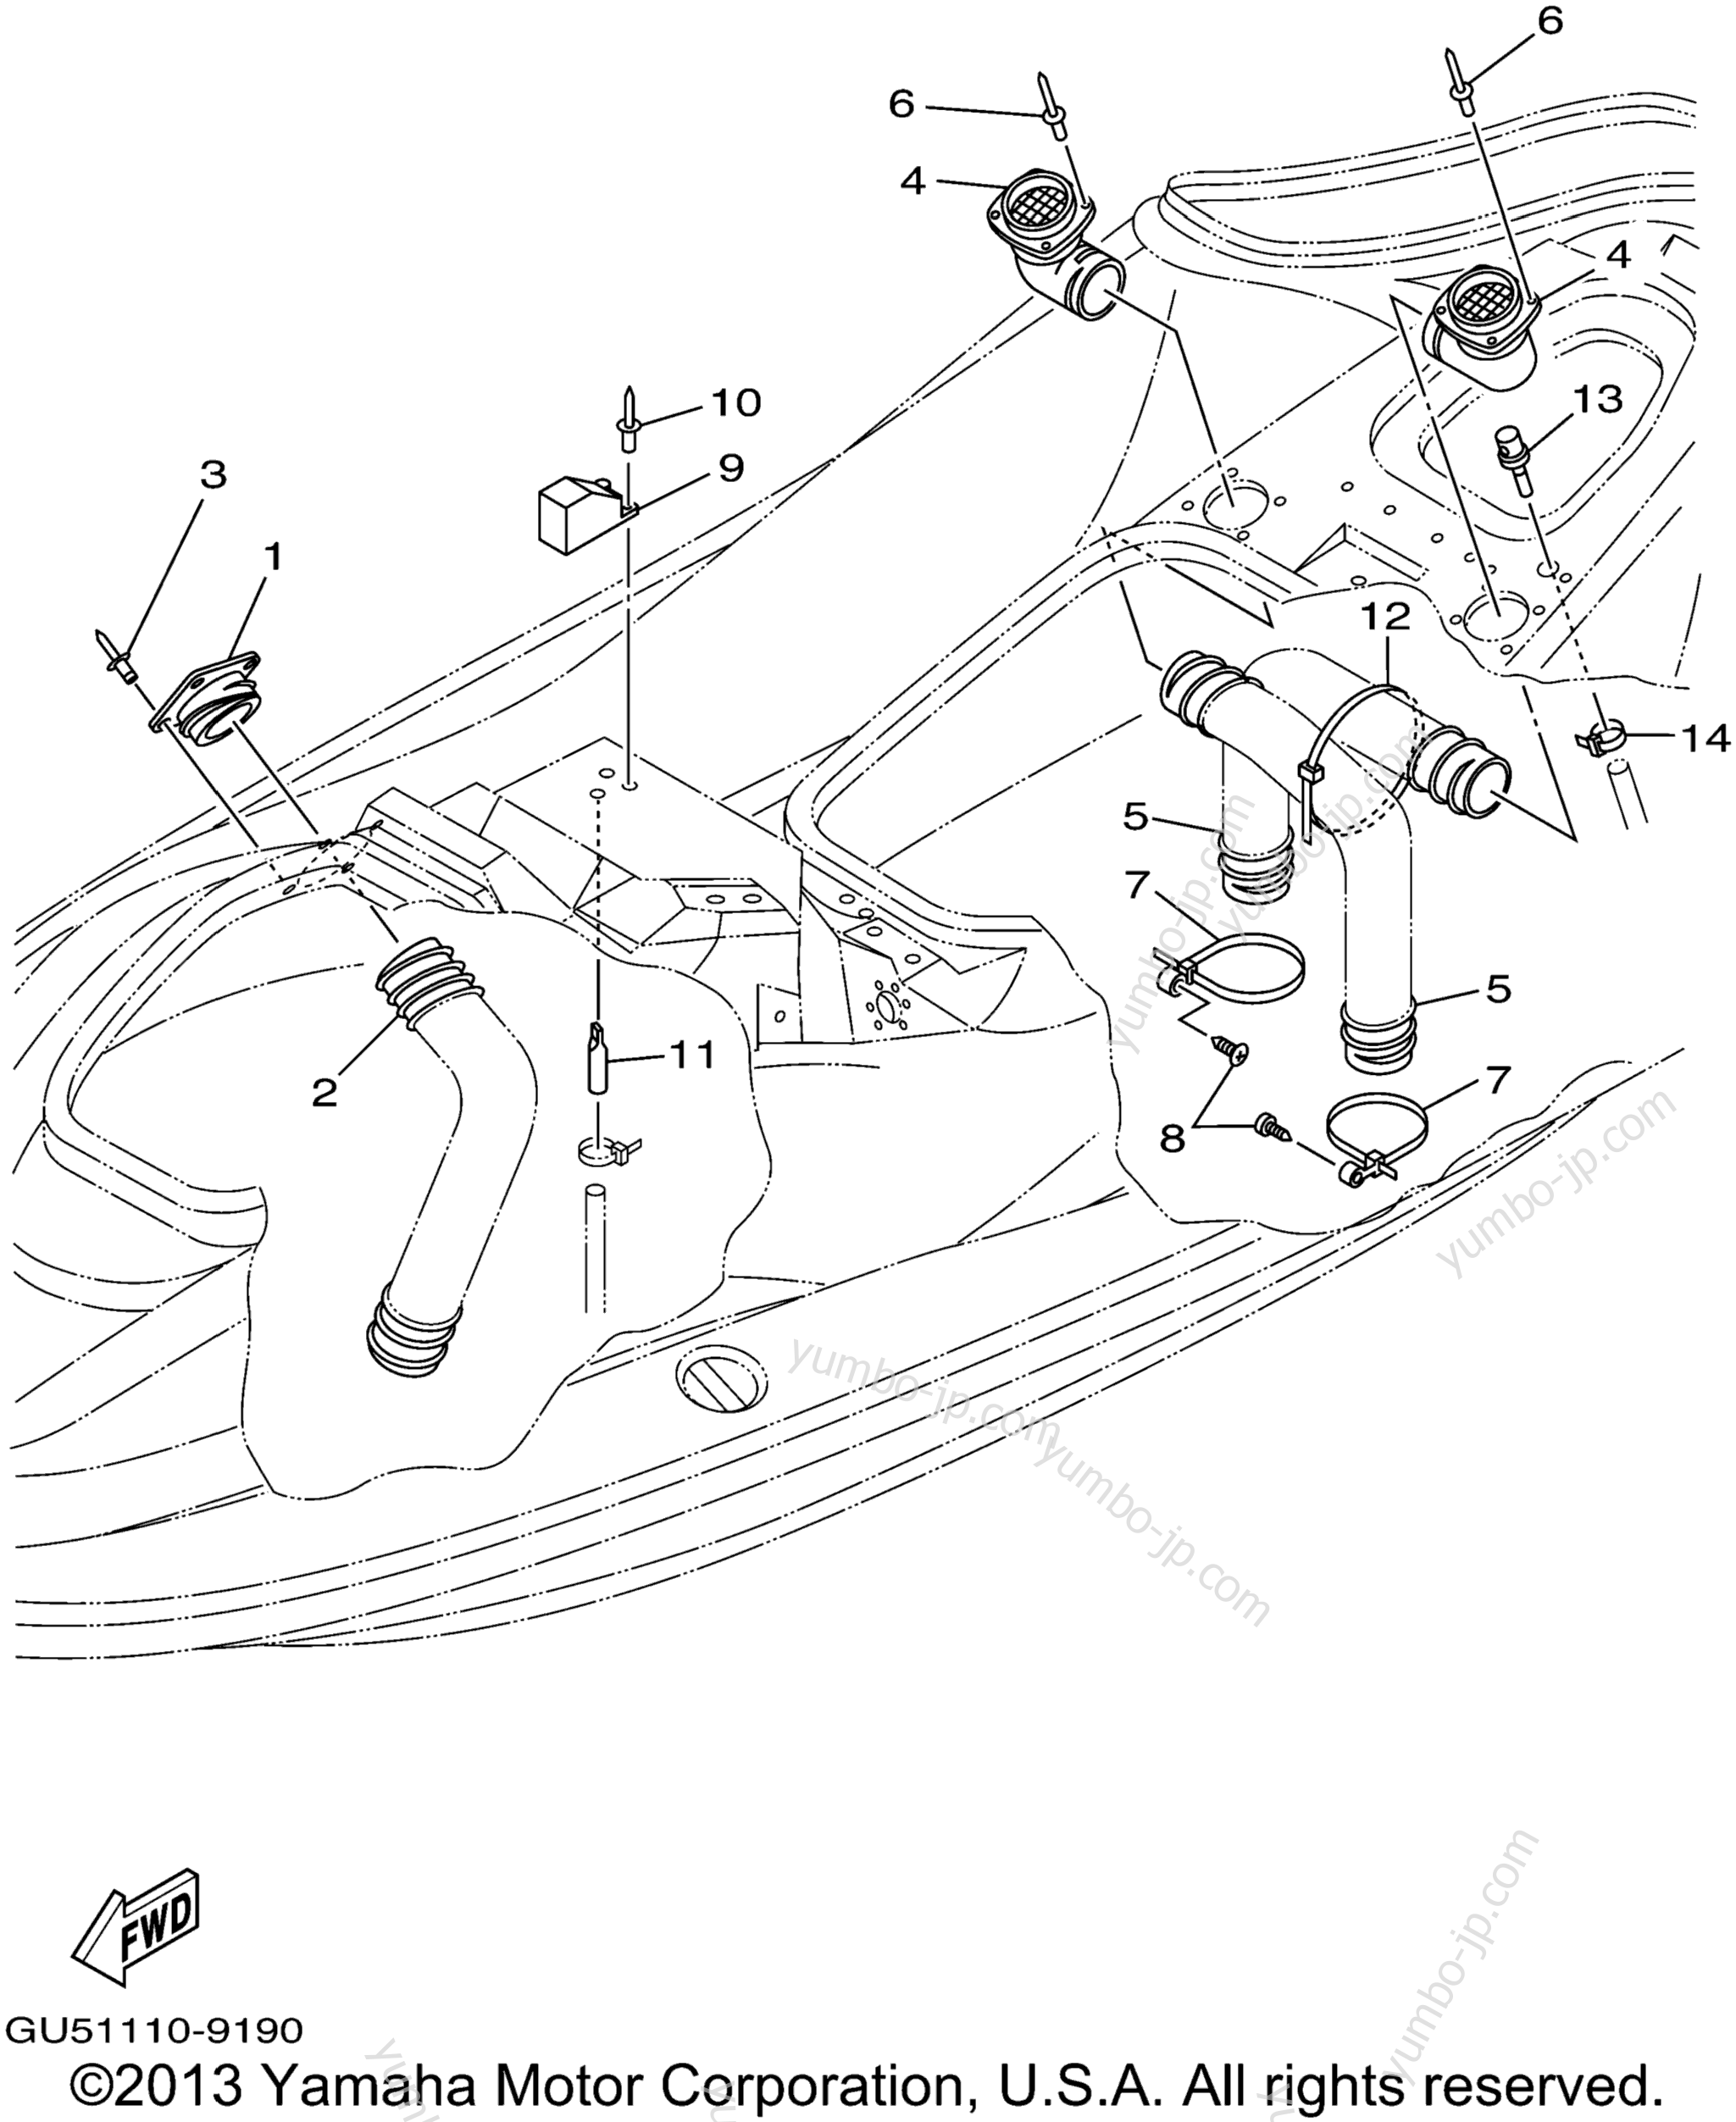 Ventilation для гидроциклов YAMAHA SUV1200 (SV1200Z) 2001 г.